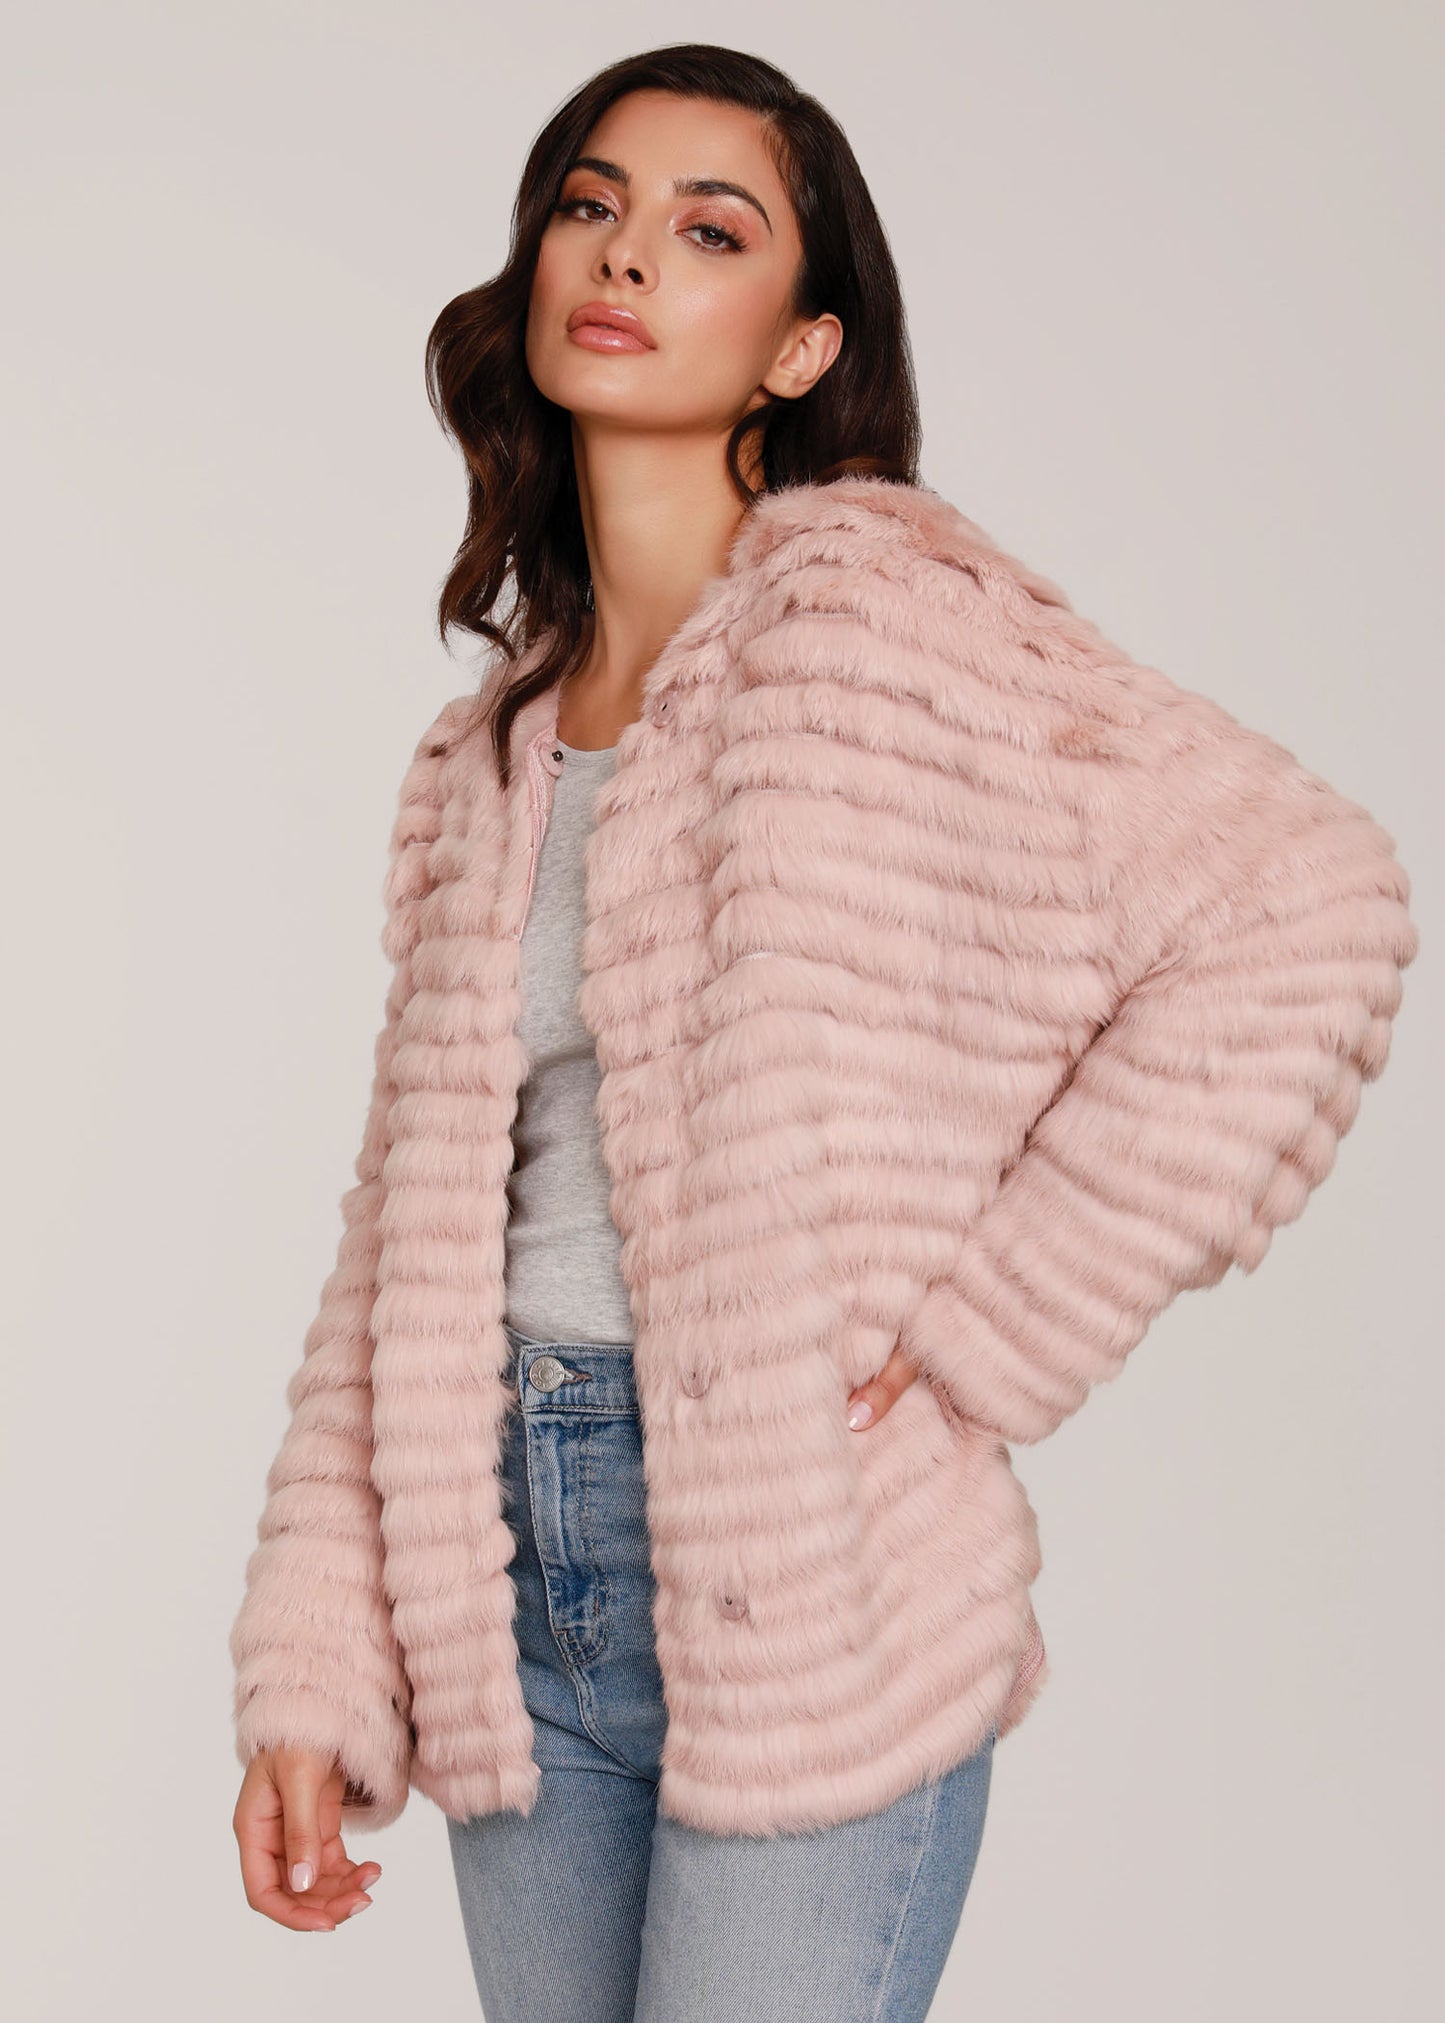 Over sized Fur Jacket